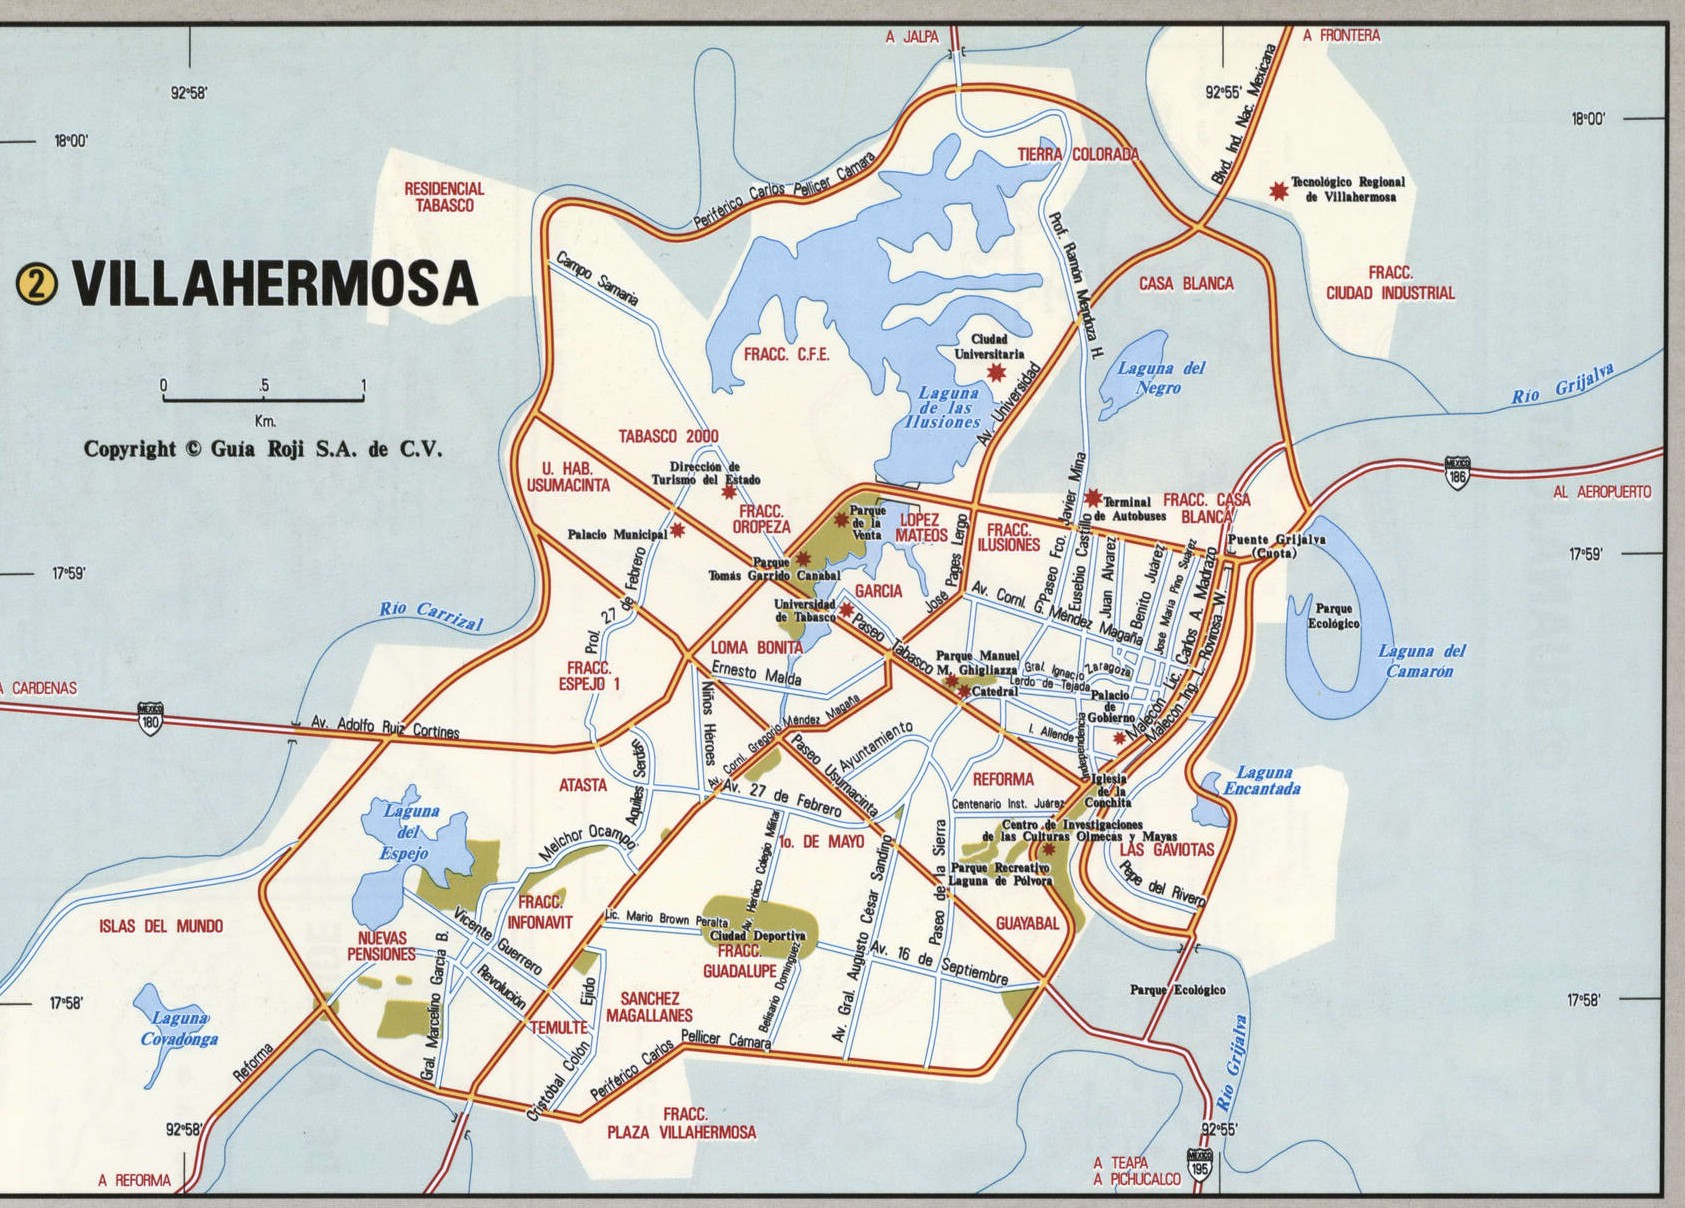 VillaHermosa city map